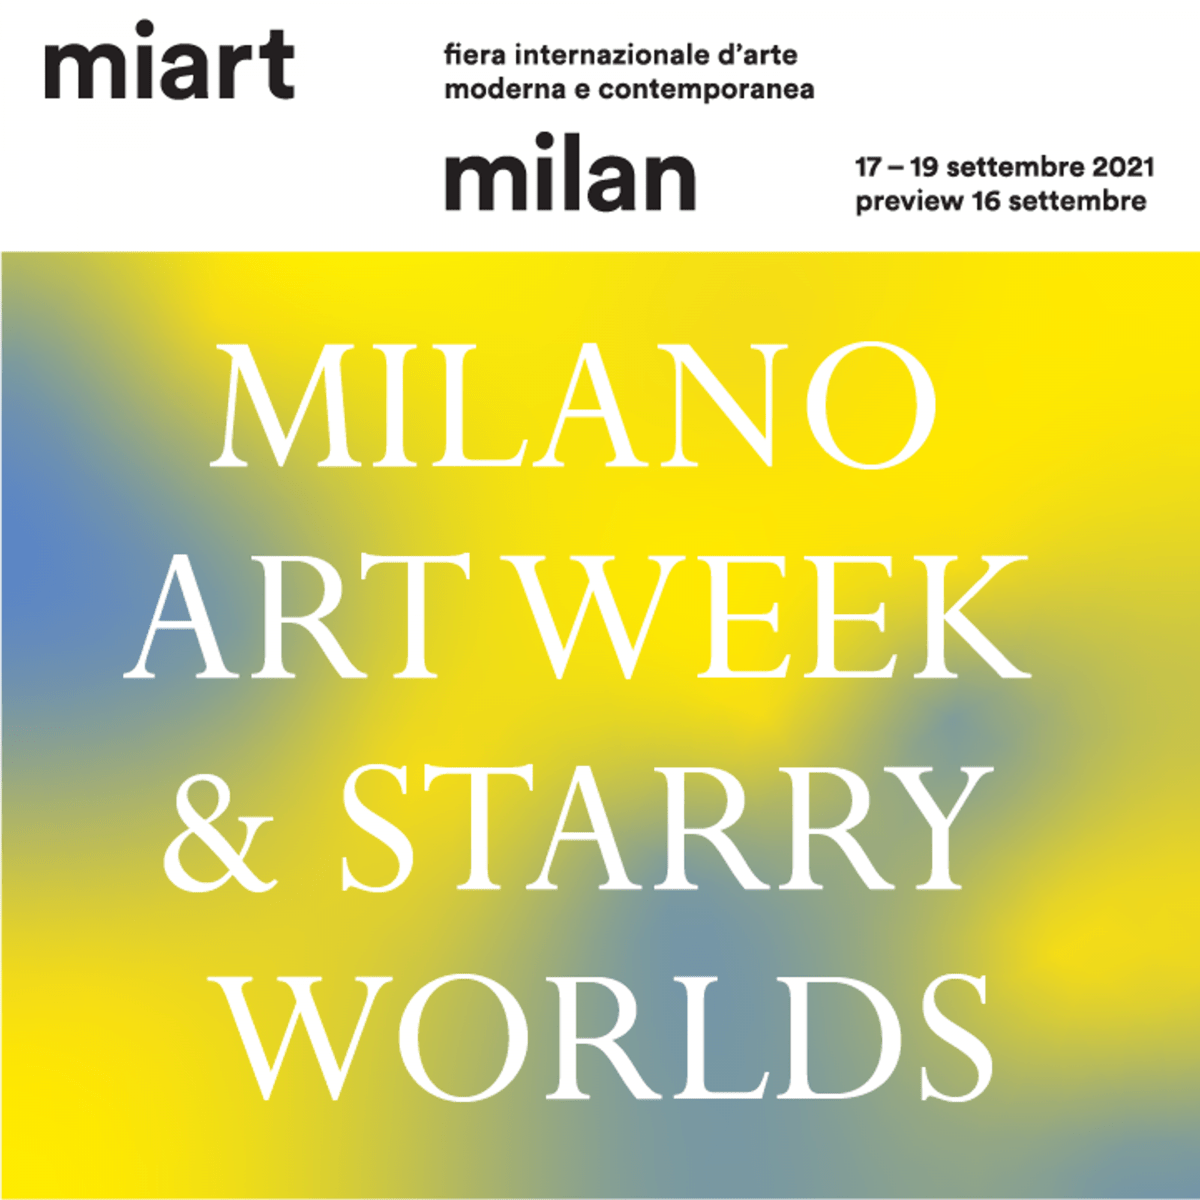 miart 2021 | I “Mondi stellati” dell'artweek milanese